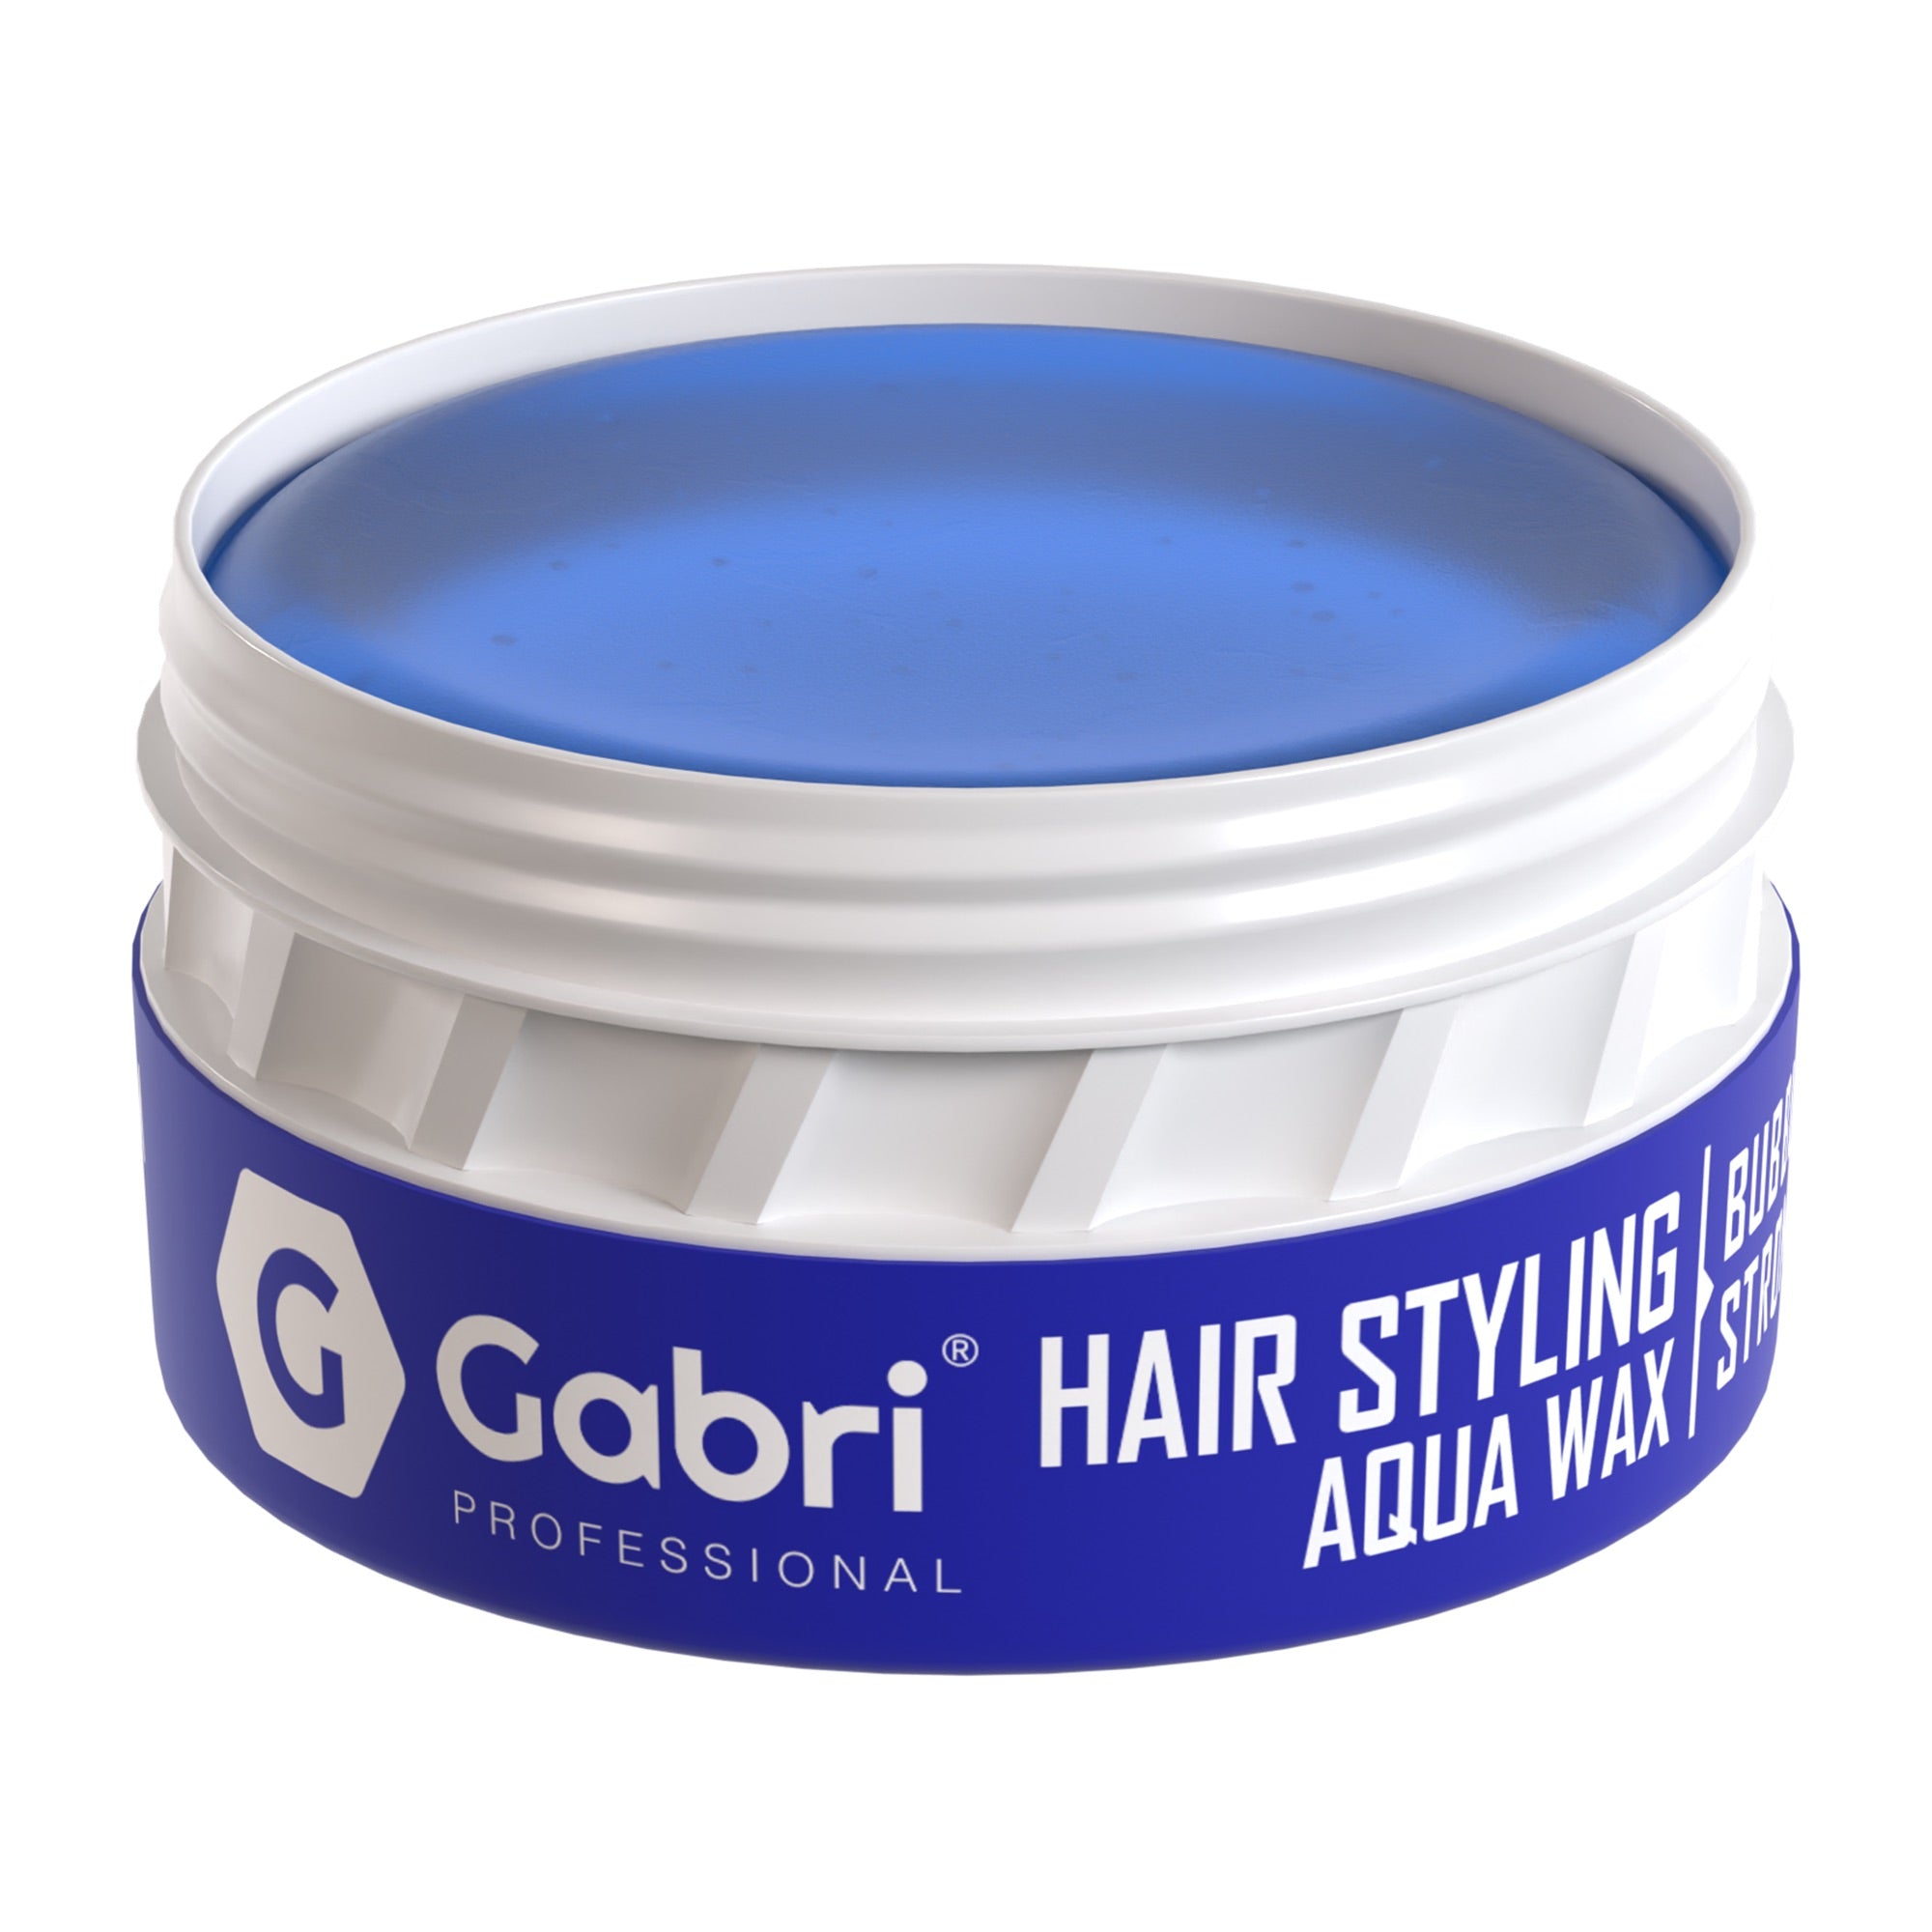 Gabri Professional - Hair Styling Wax Aqua Bubblegum Strong 150ml